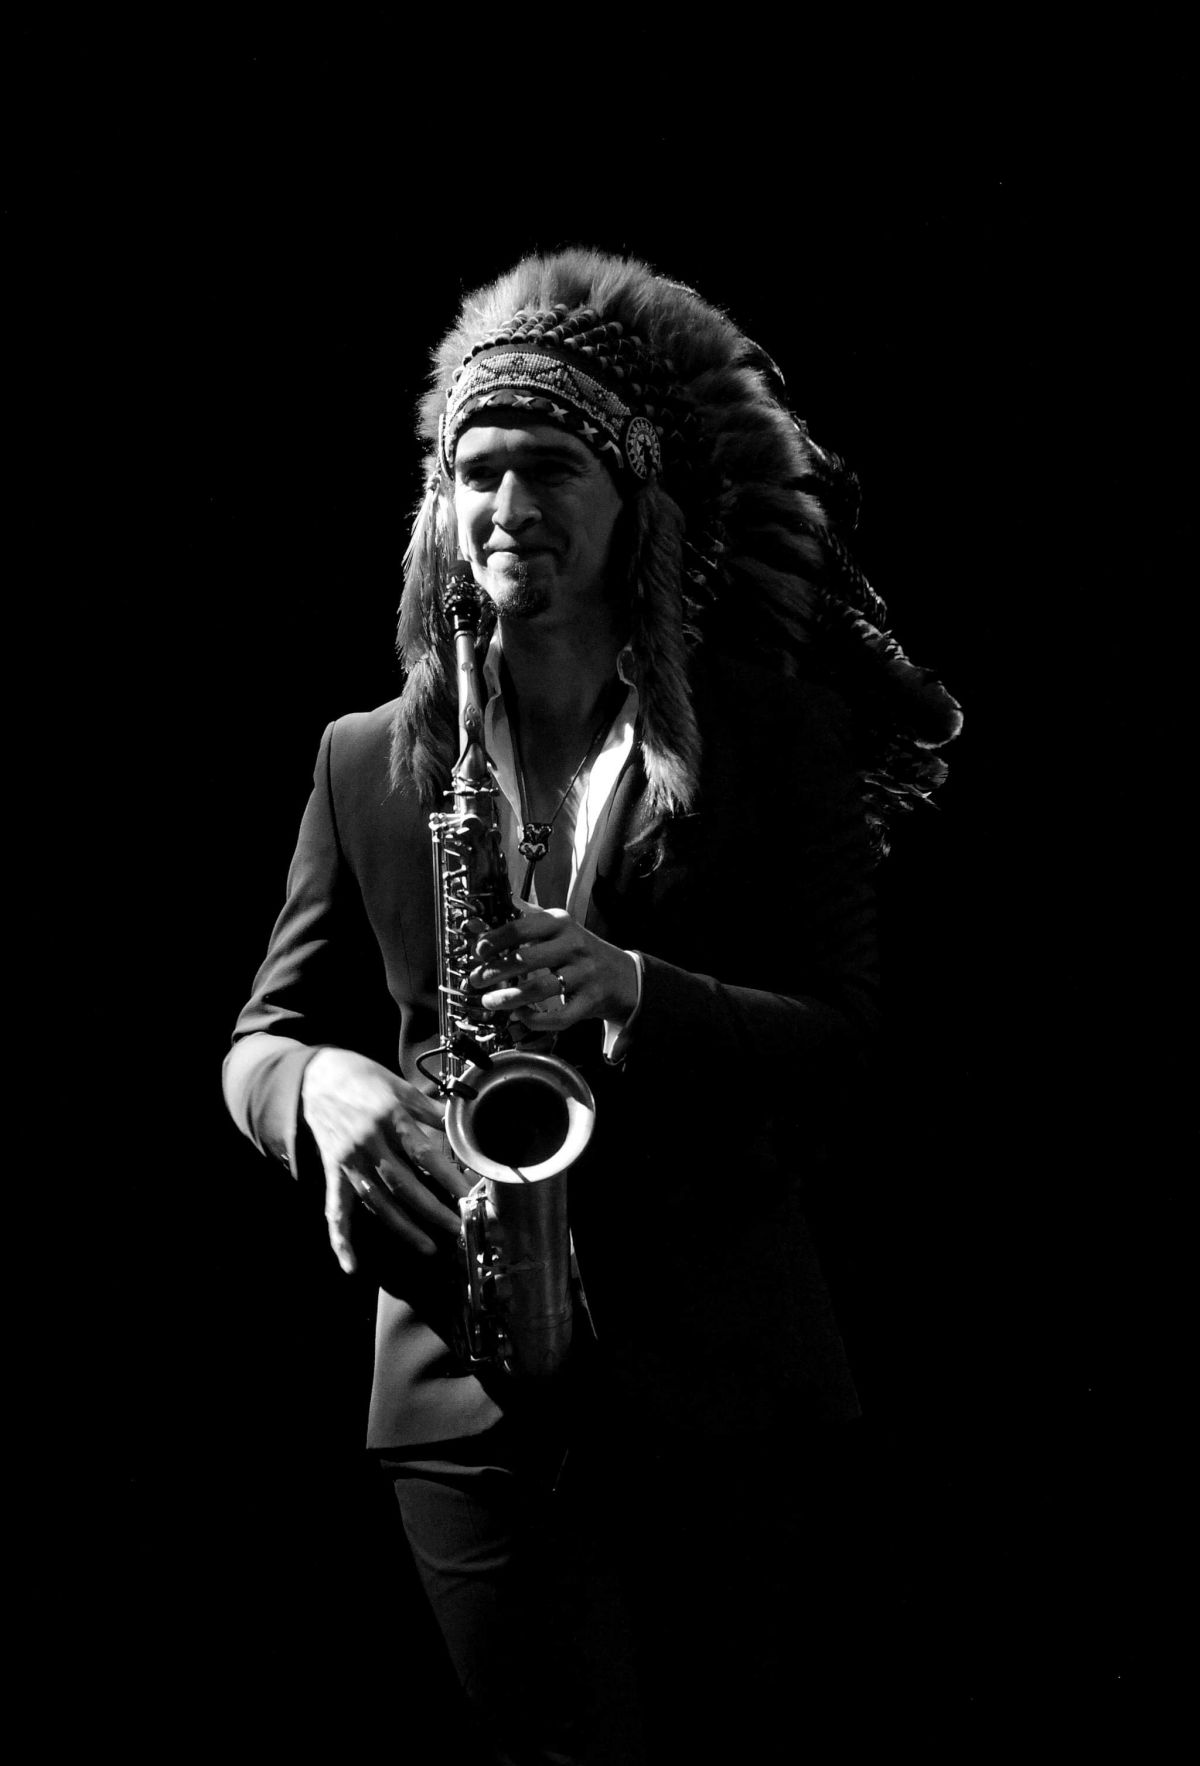 Índio saxofonista | João Carlos Alves de Souza